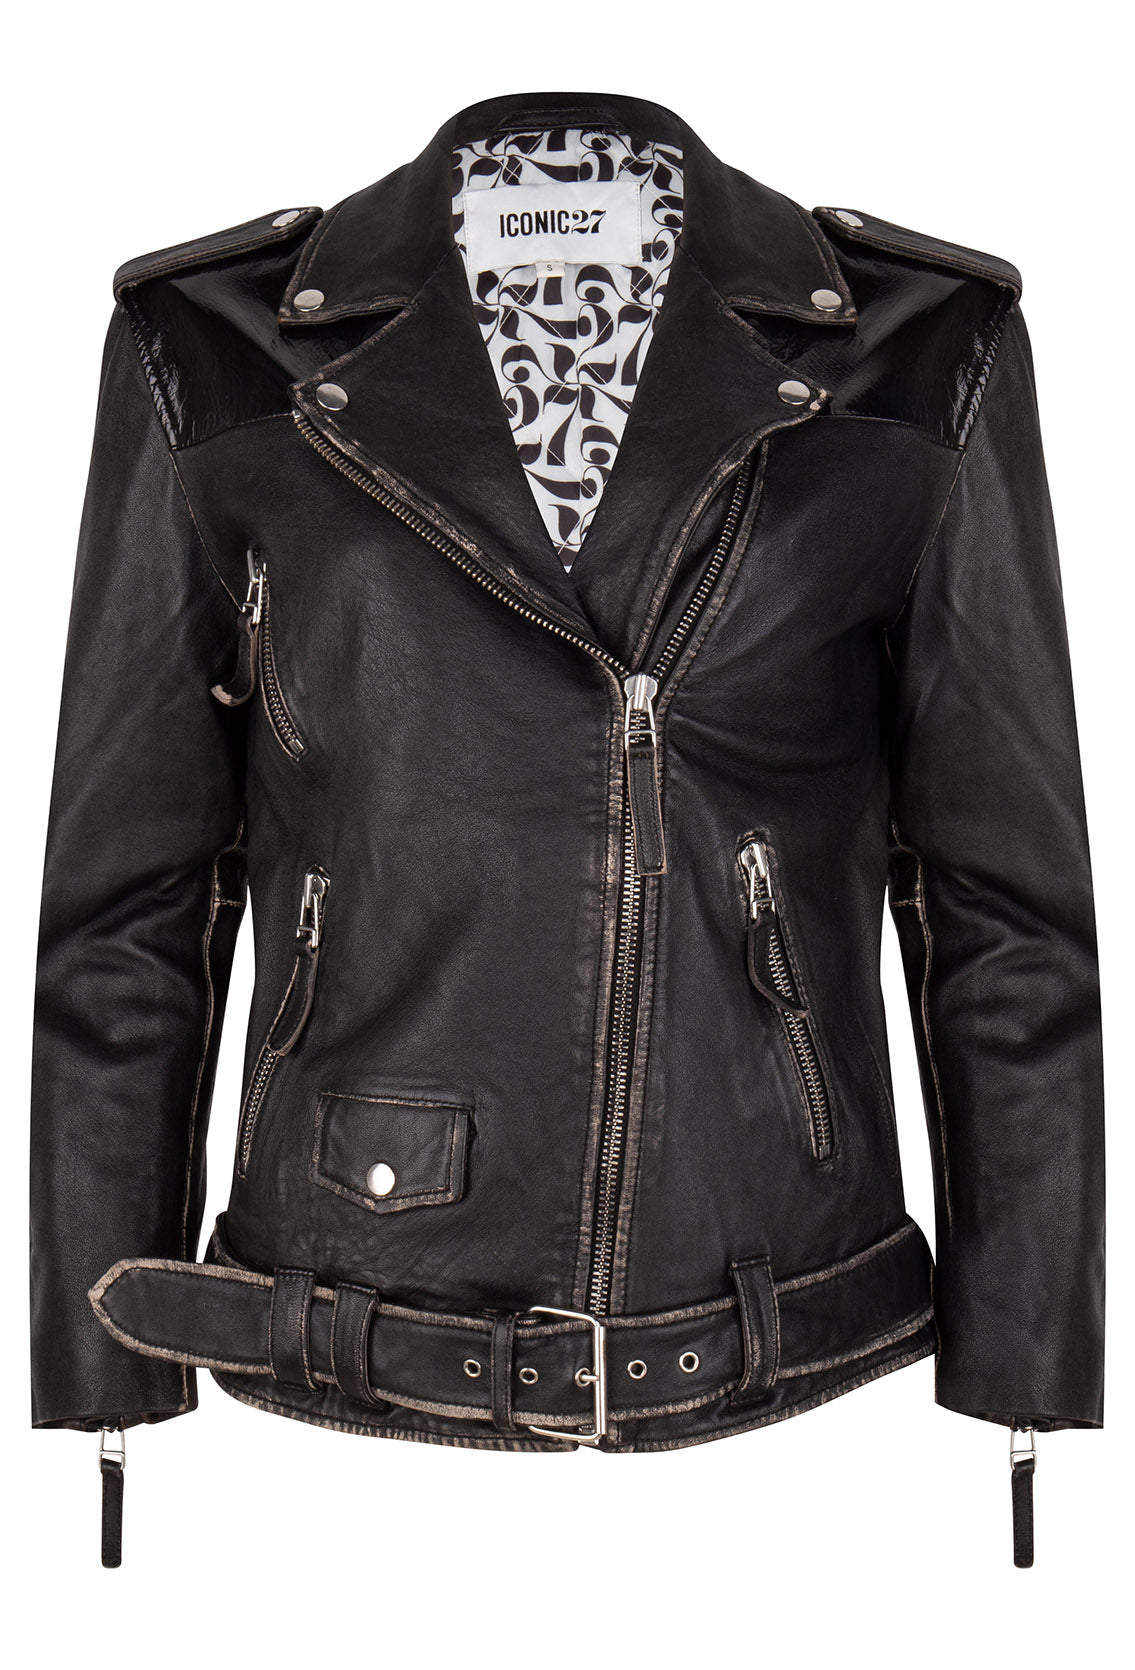 Rub off vinyl leather biker jacket